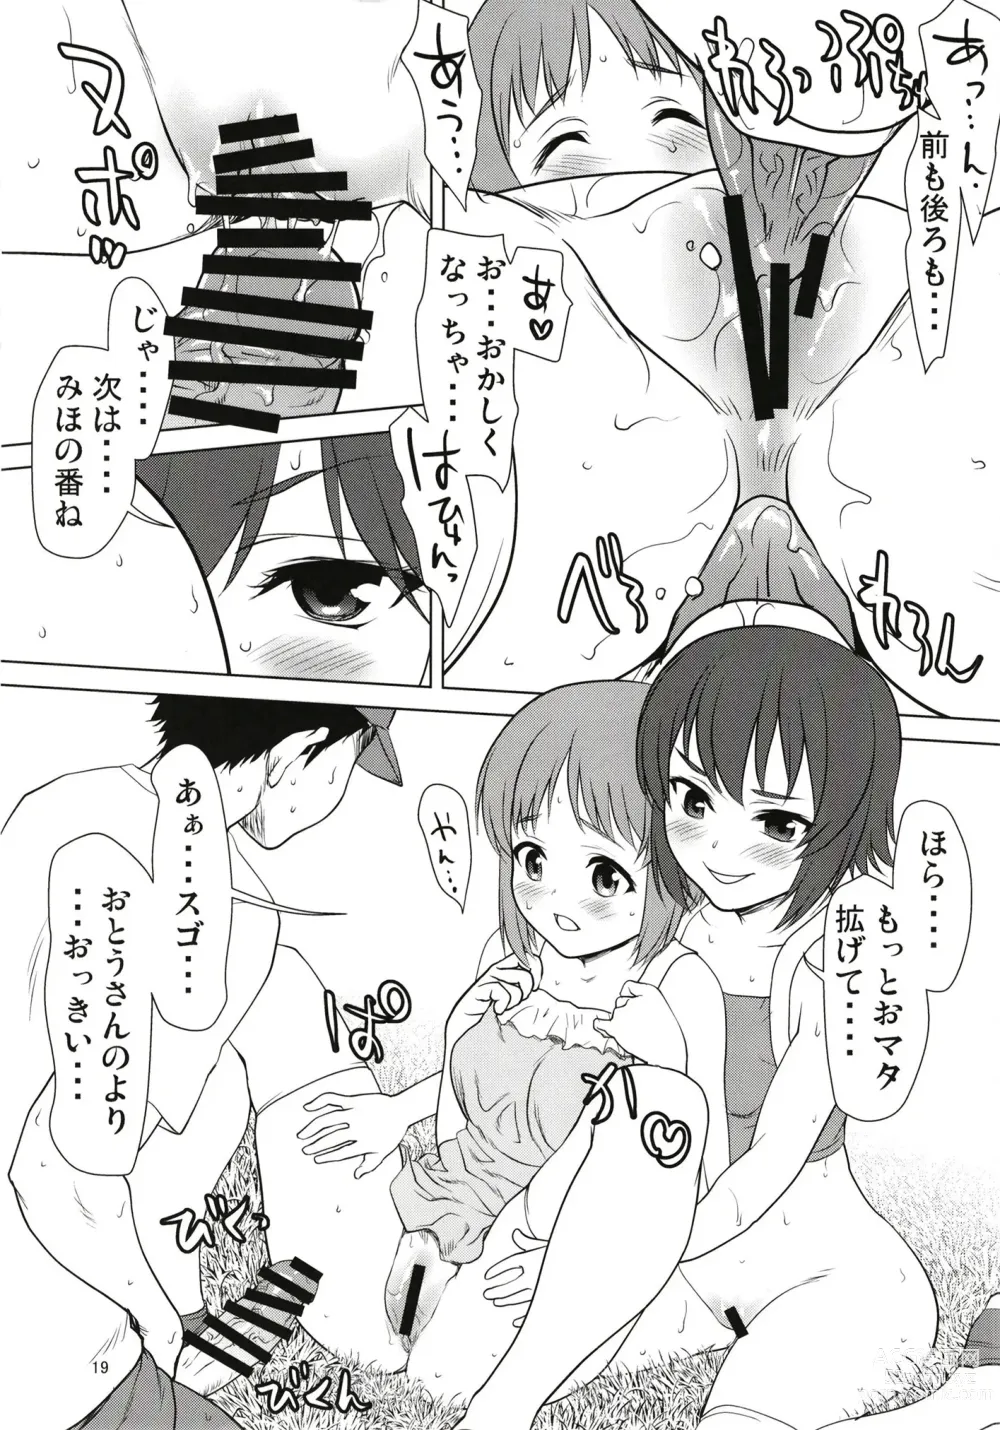 Page 19 of doujinshi Nishizumi-ke no Hime Asobi